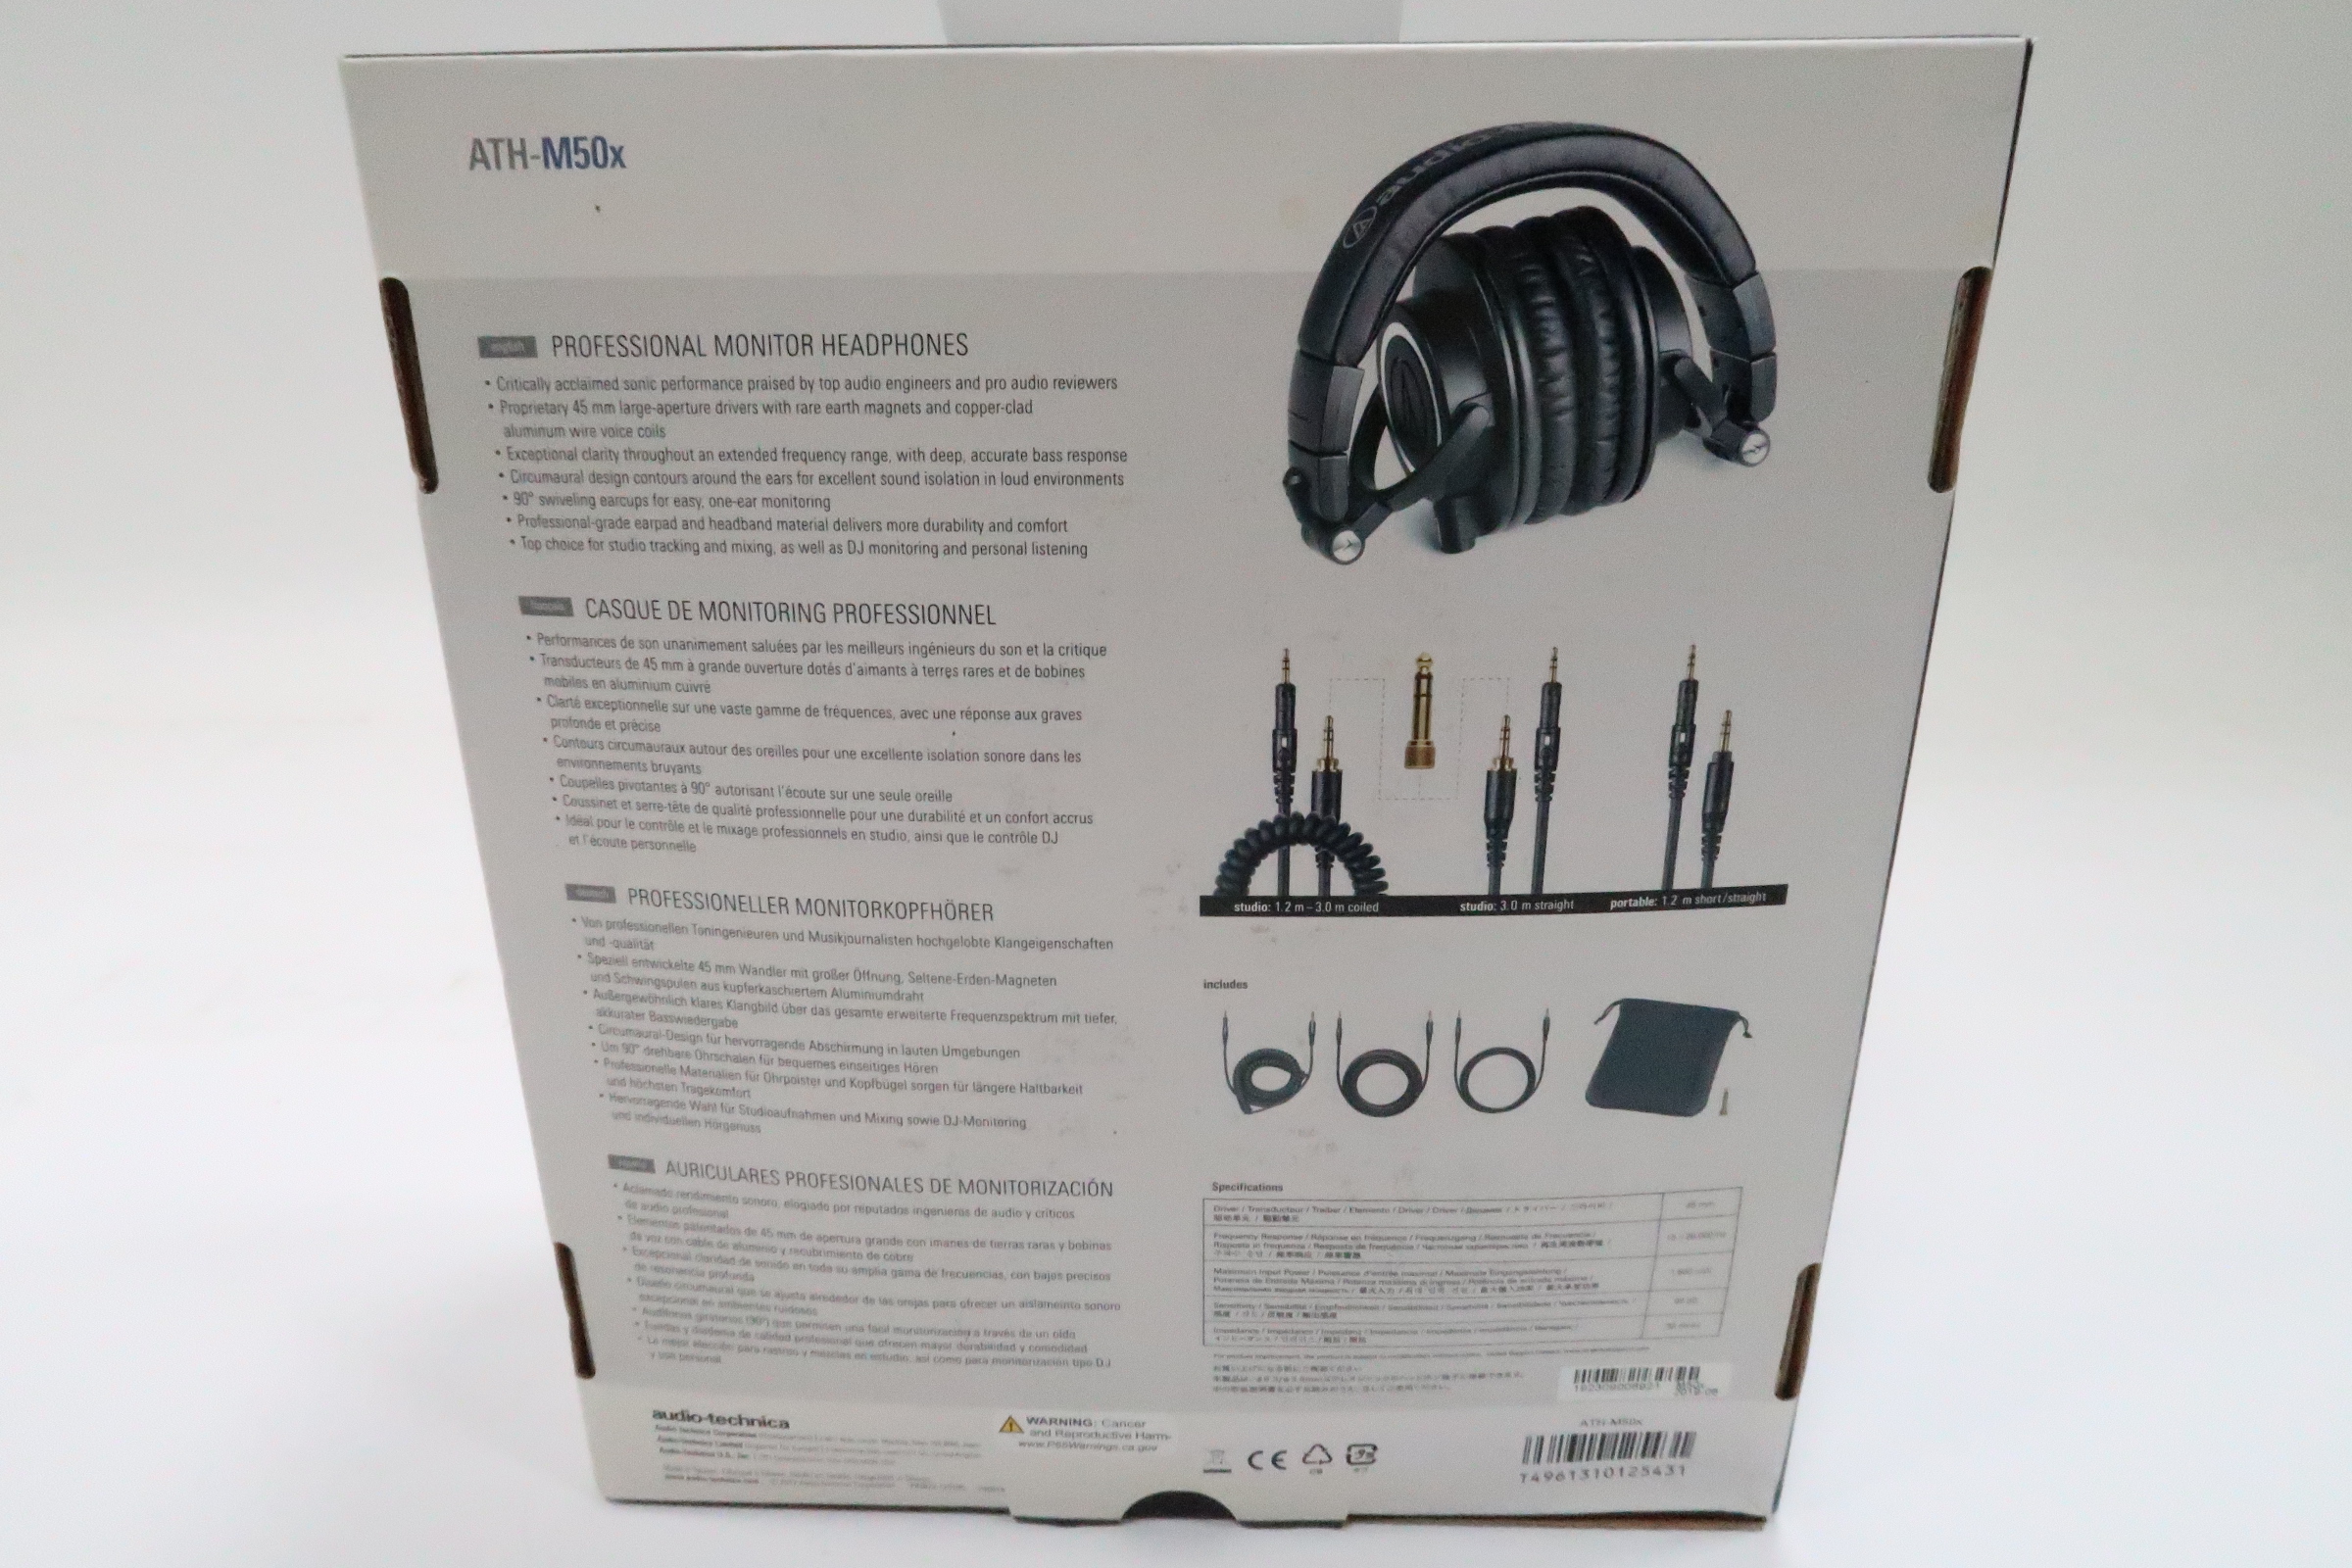 Audio-Technica M50x Auriclares Profesionales Para Monitorizacoin